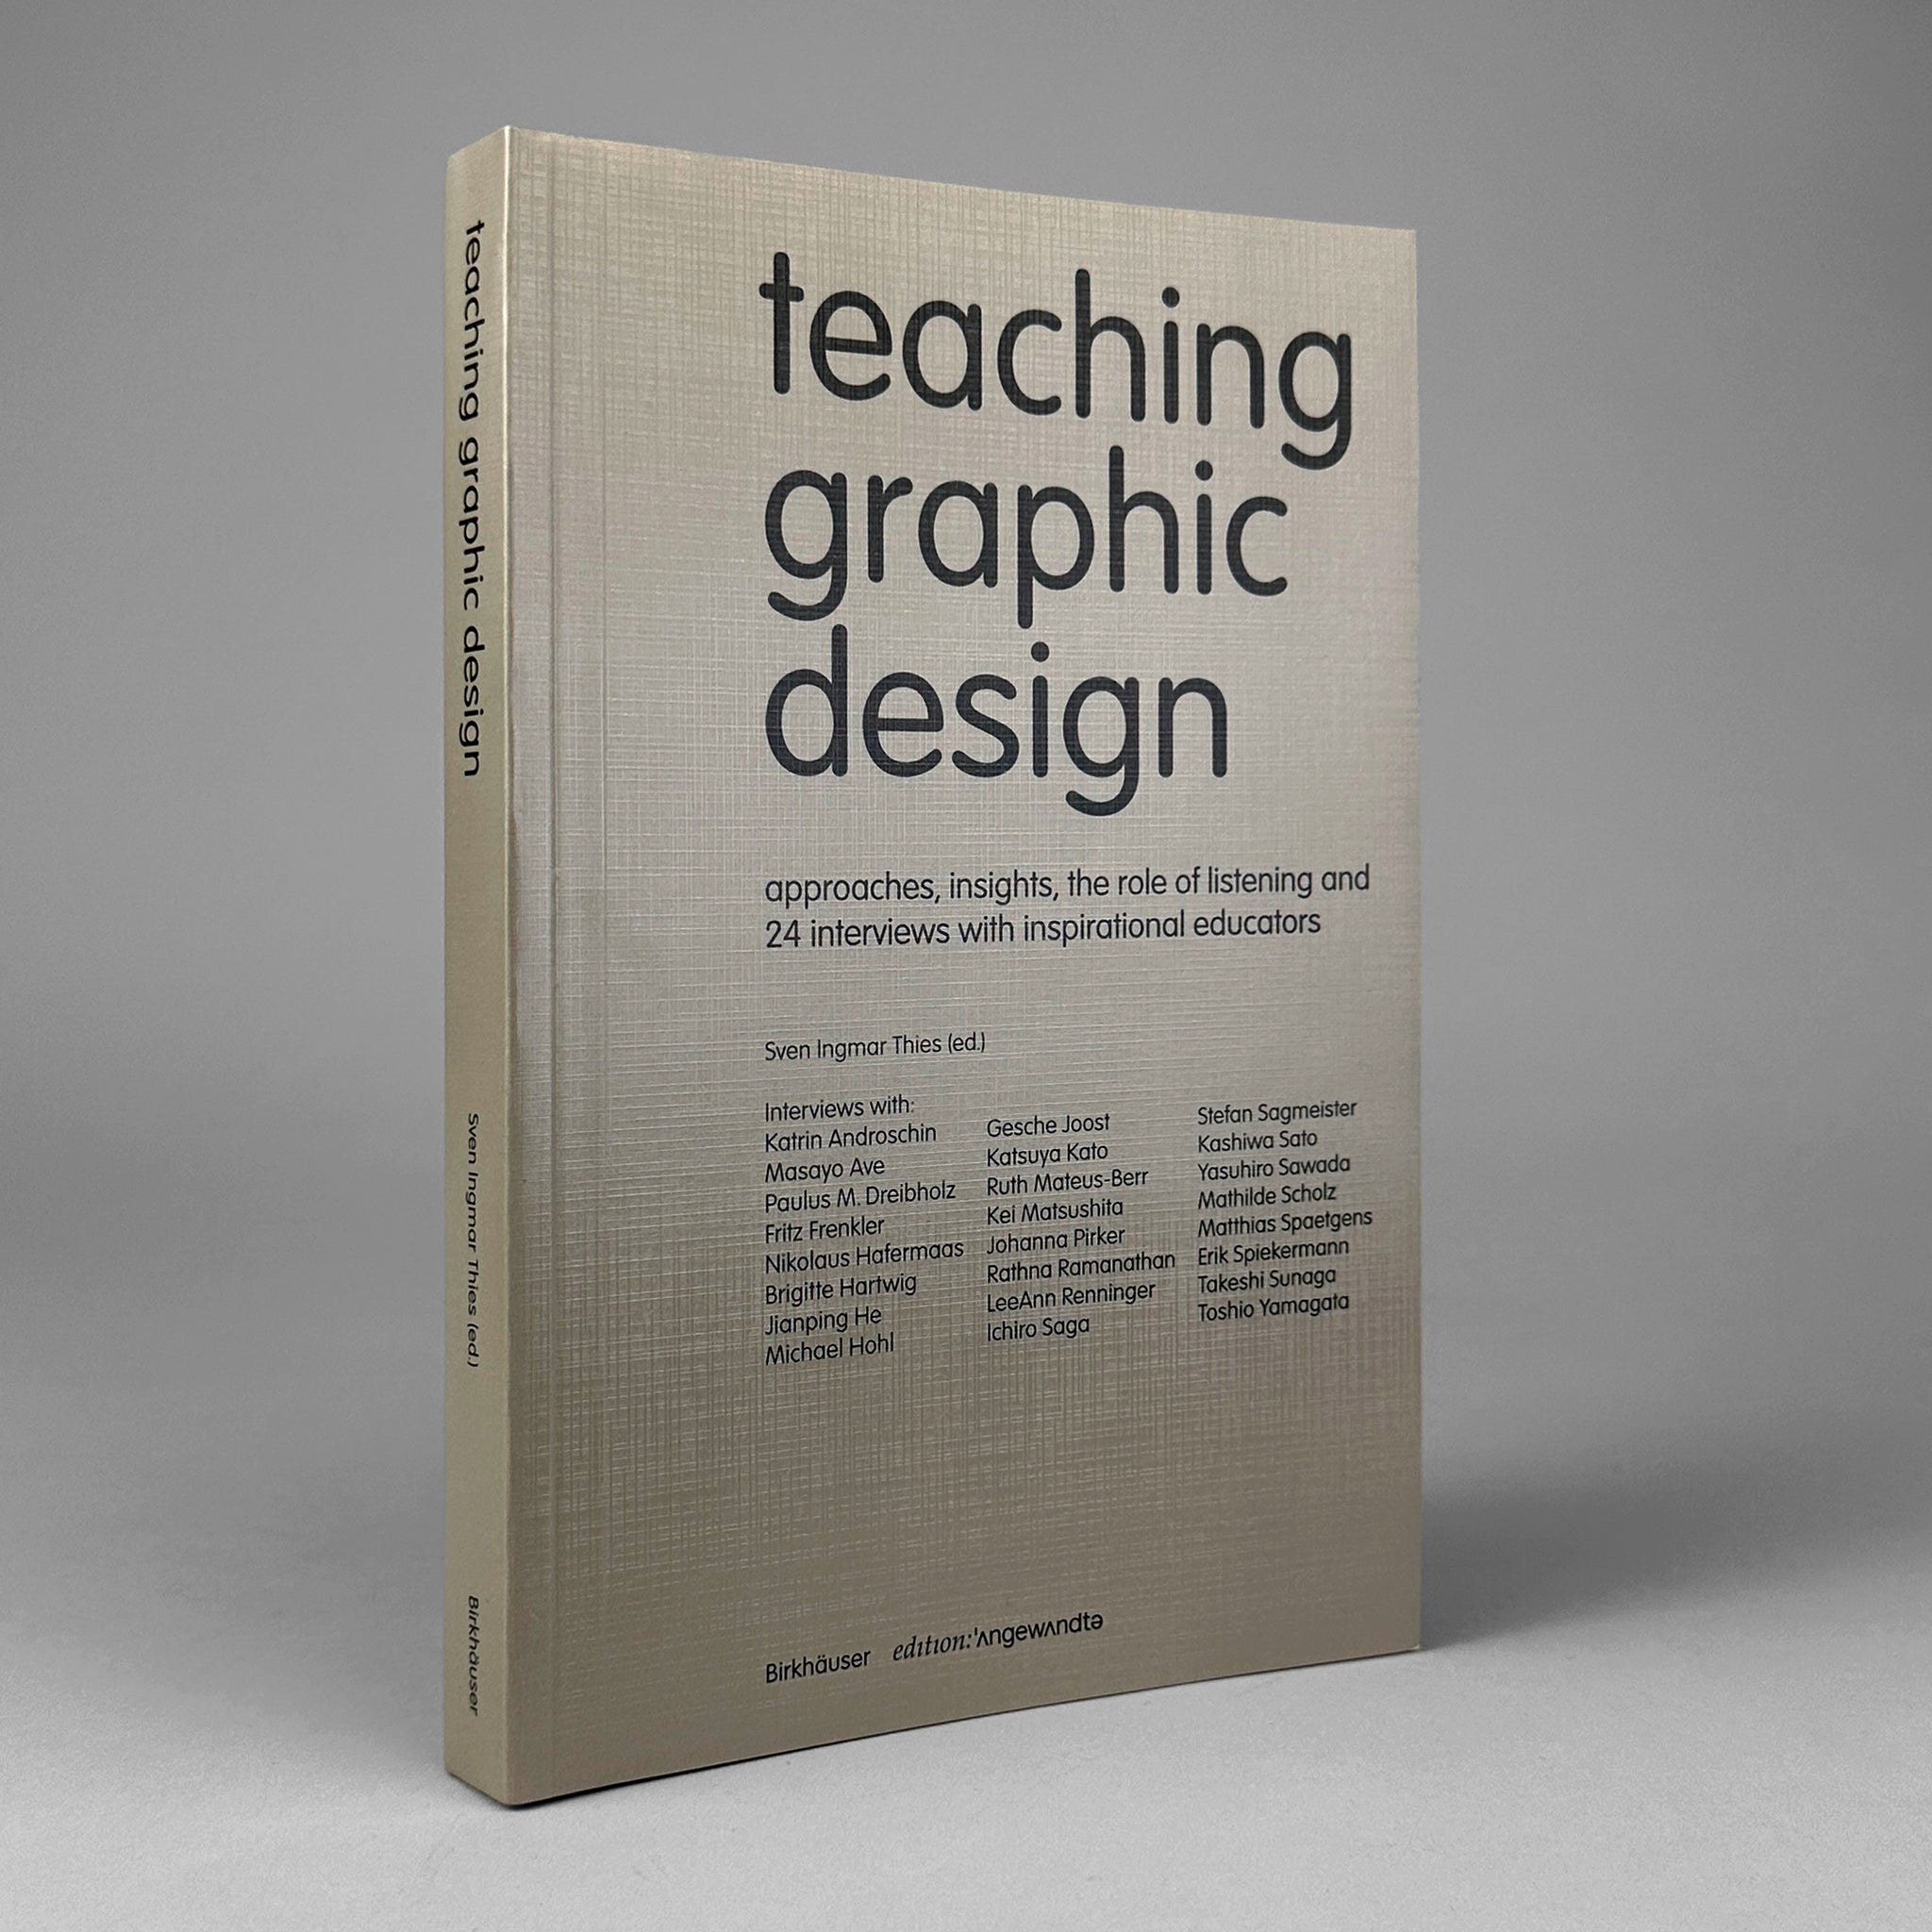 The Art of Learning Design - Instructional, Art & Graphic Design